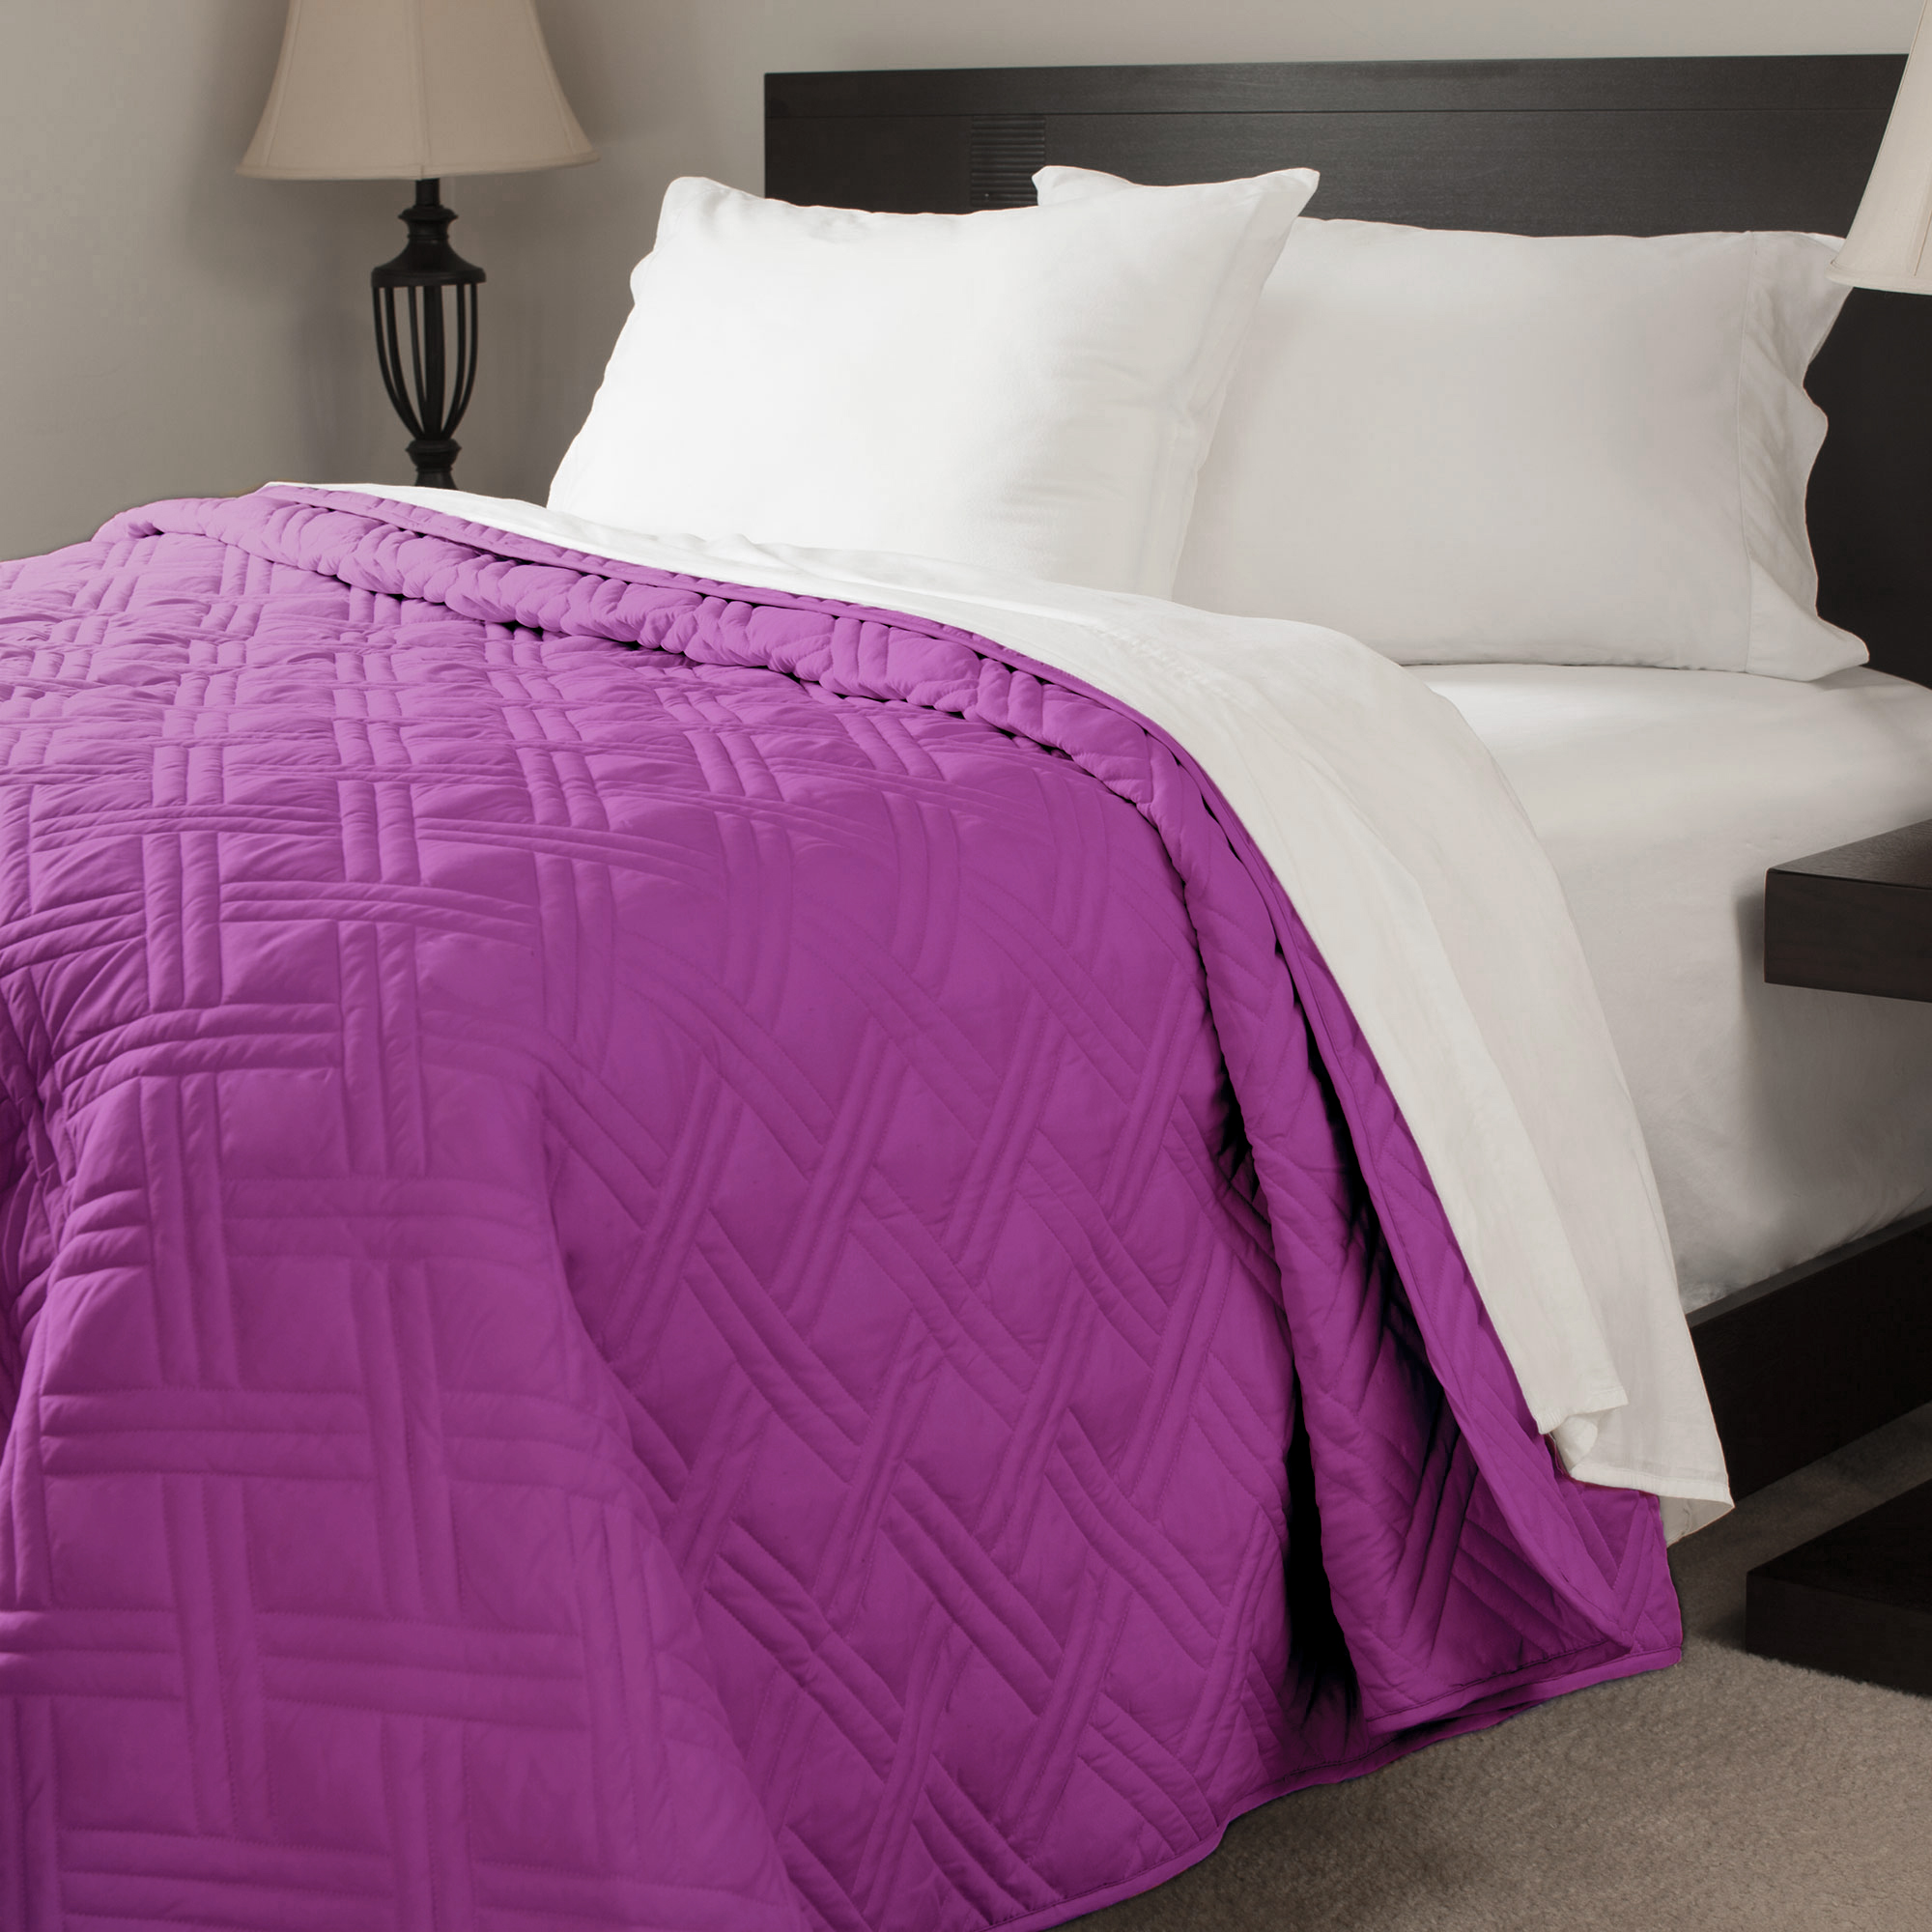 Lavish Home Solid Color Bed Quilt - King